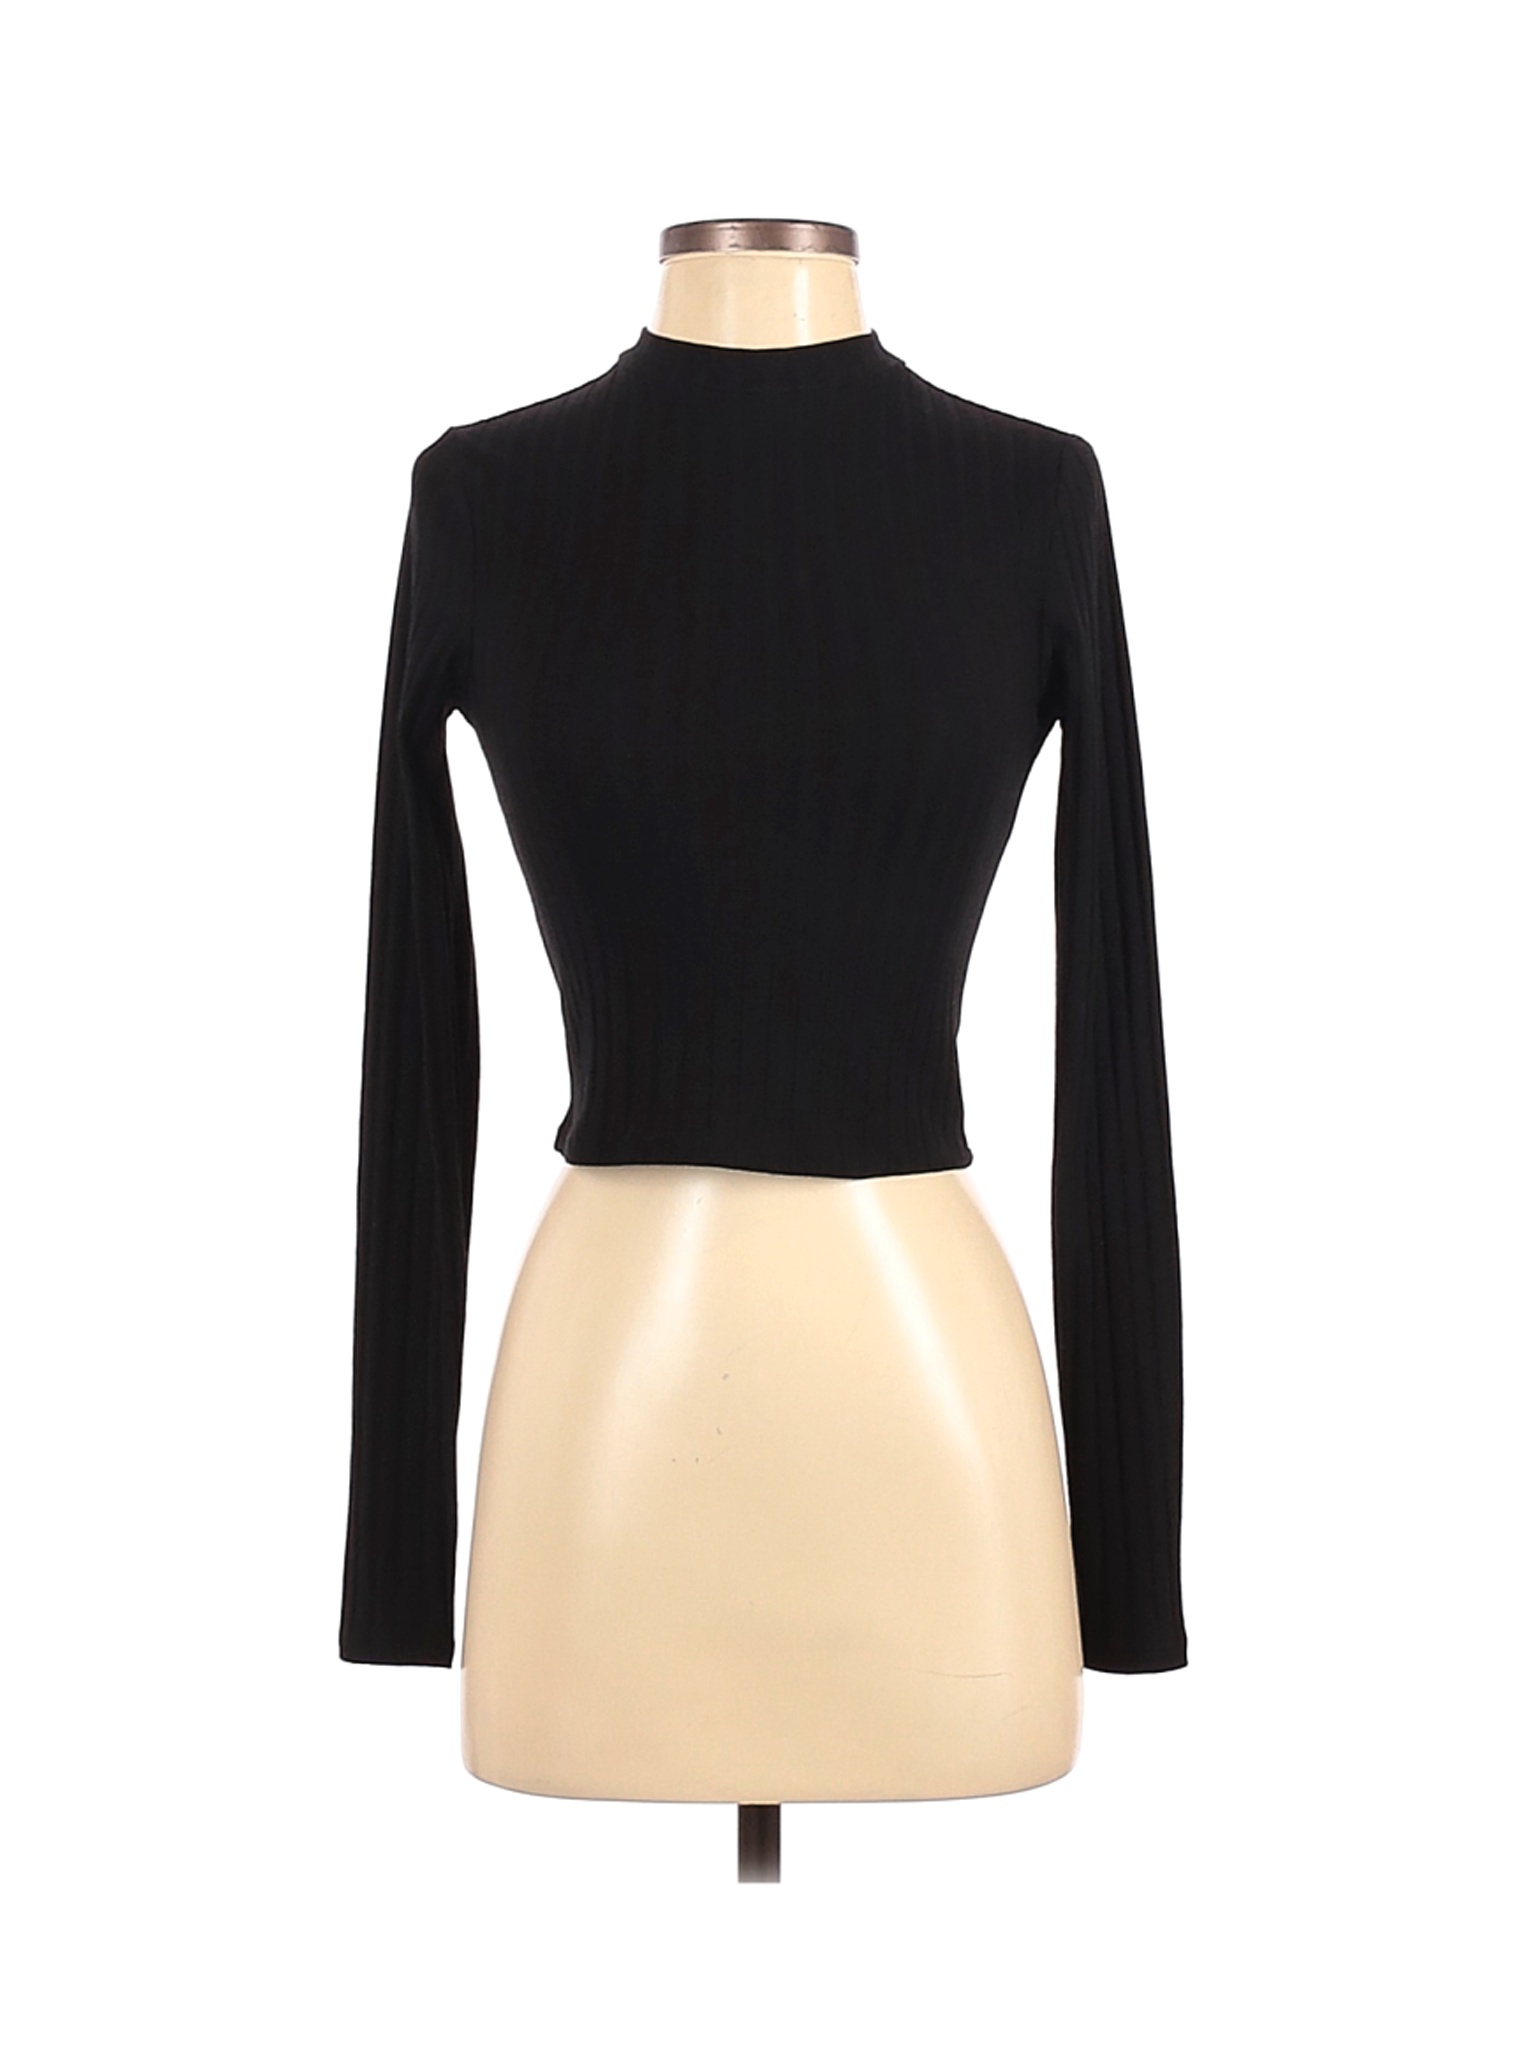 Express One Eleven Women Black Long Sleeve Top XS | eBay